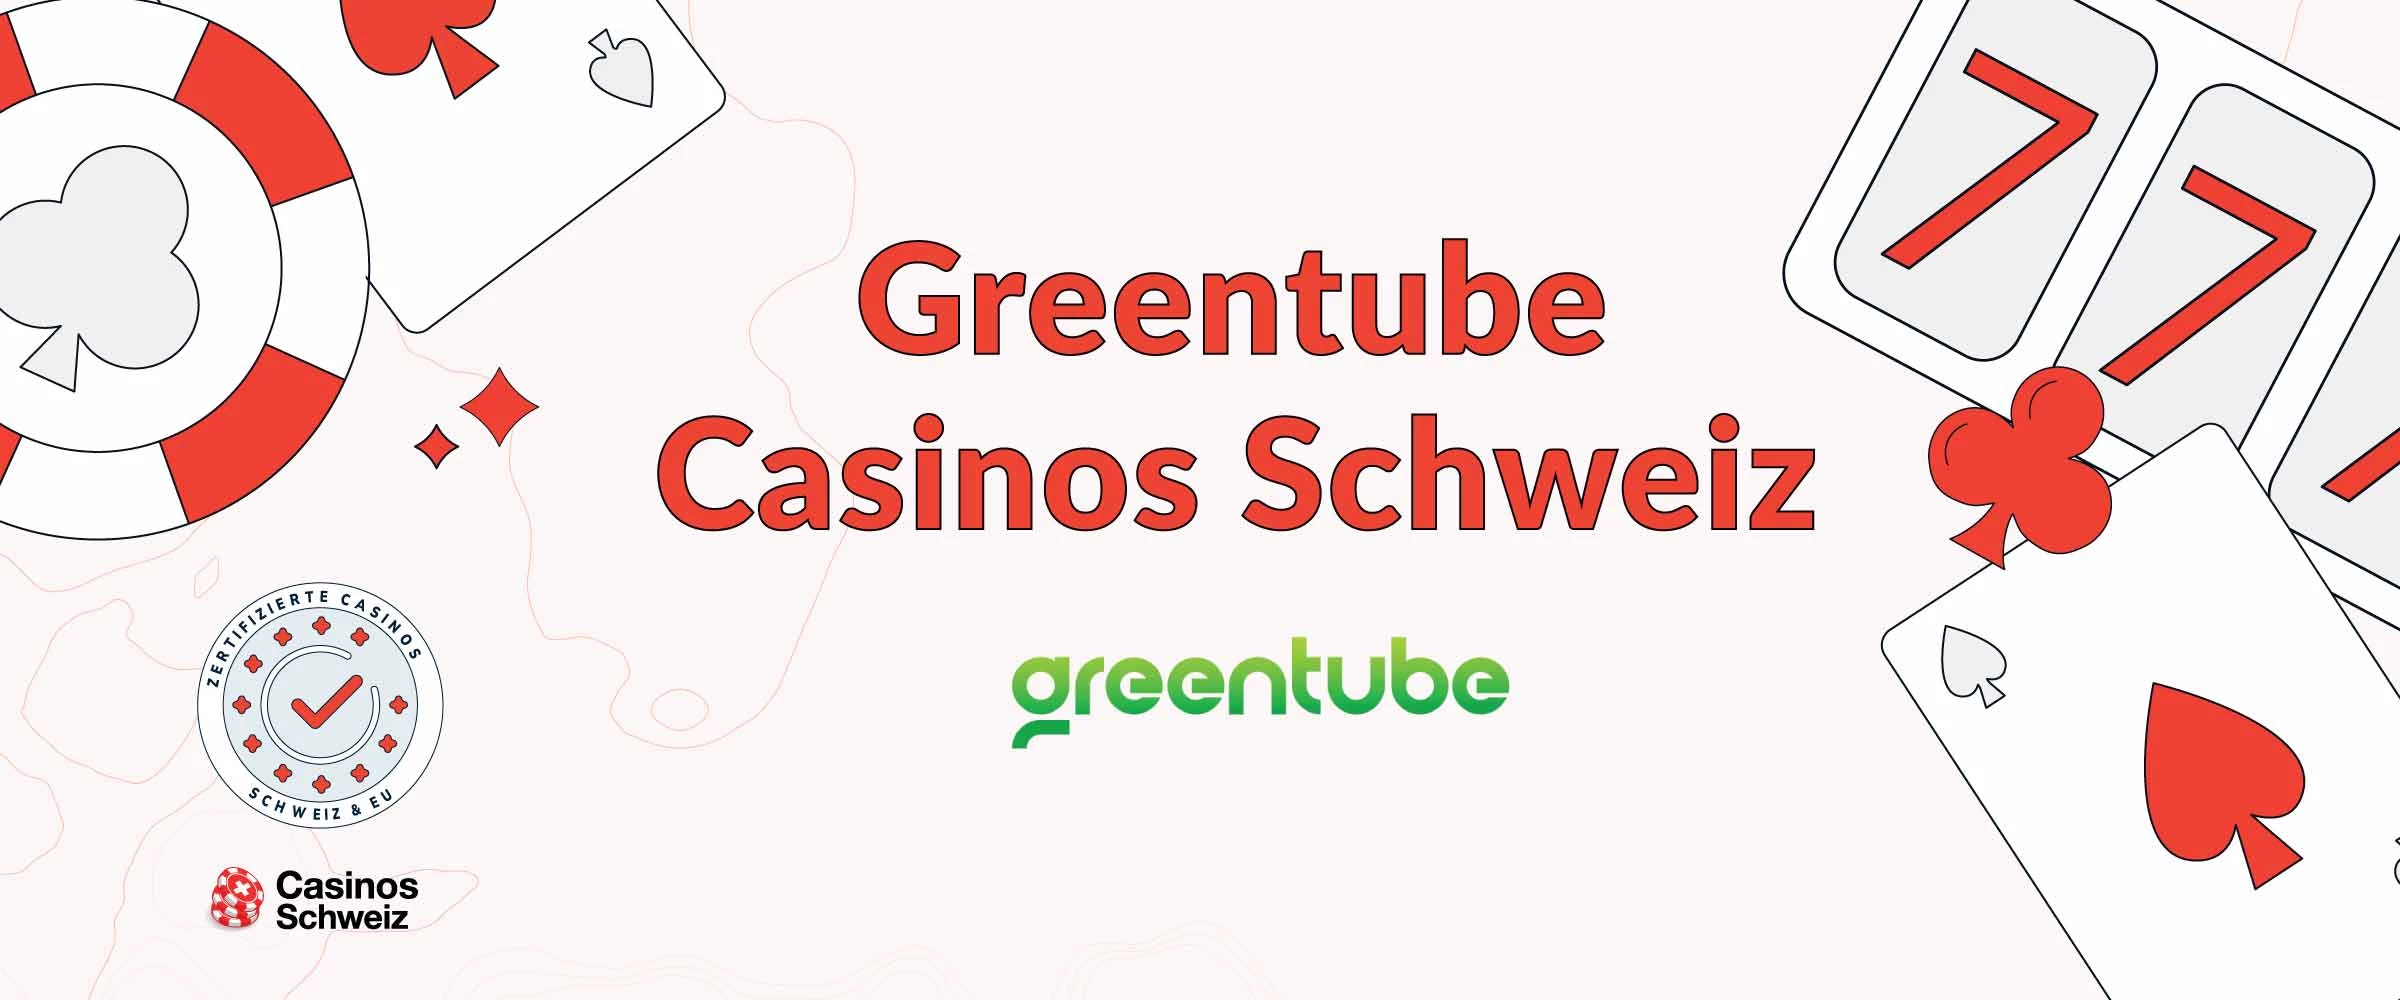 Greentube Casinos Schweiz